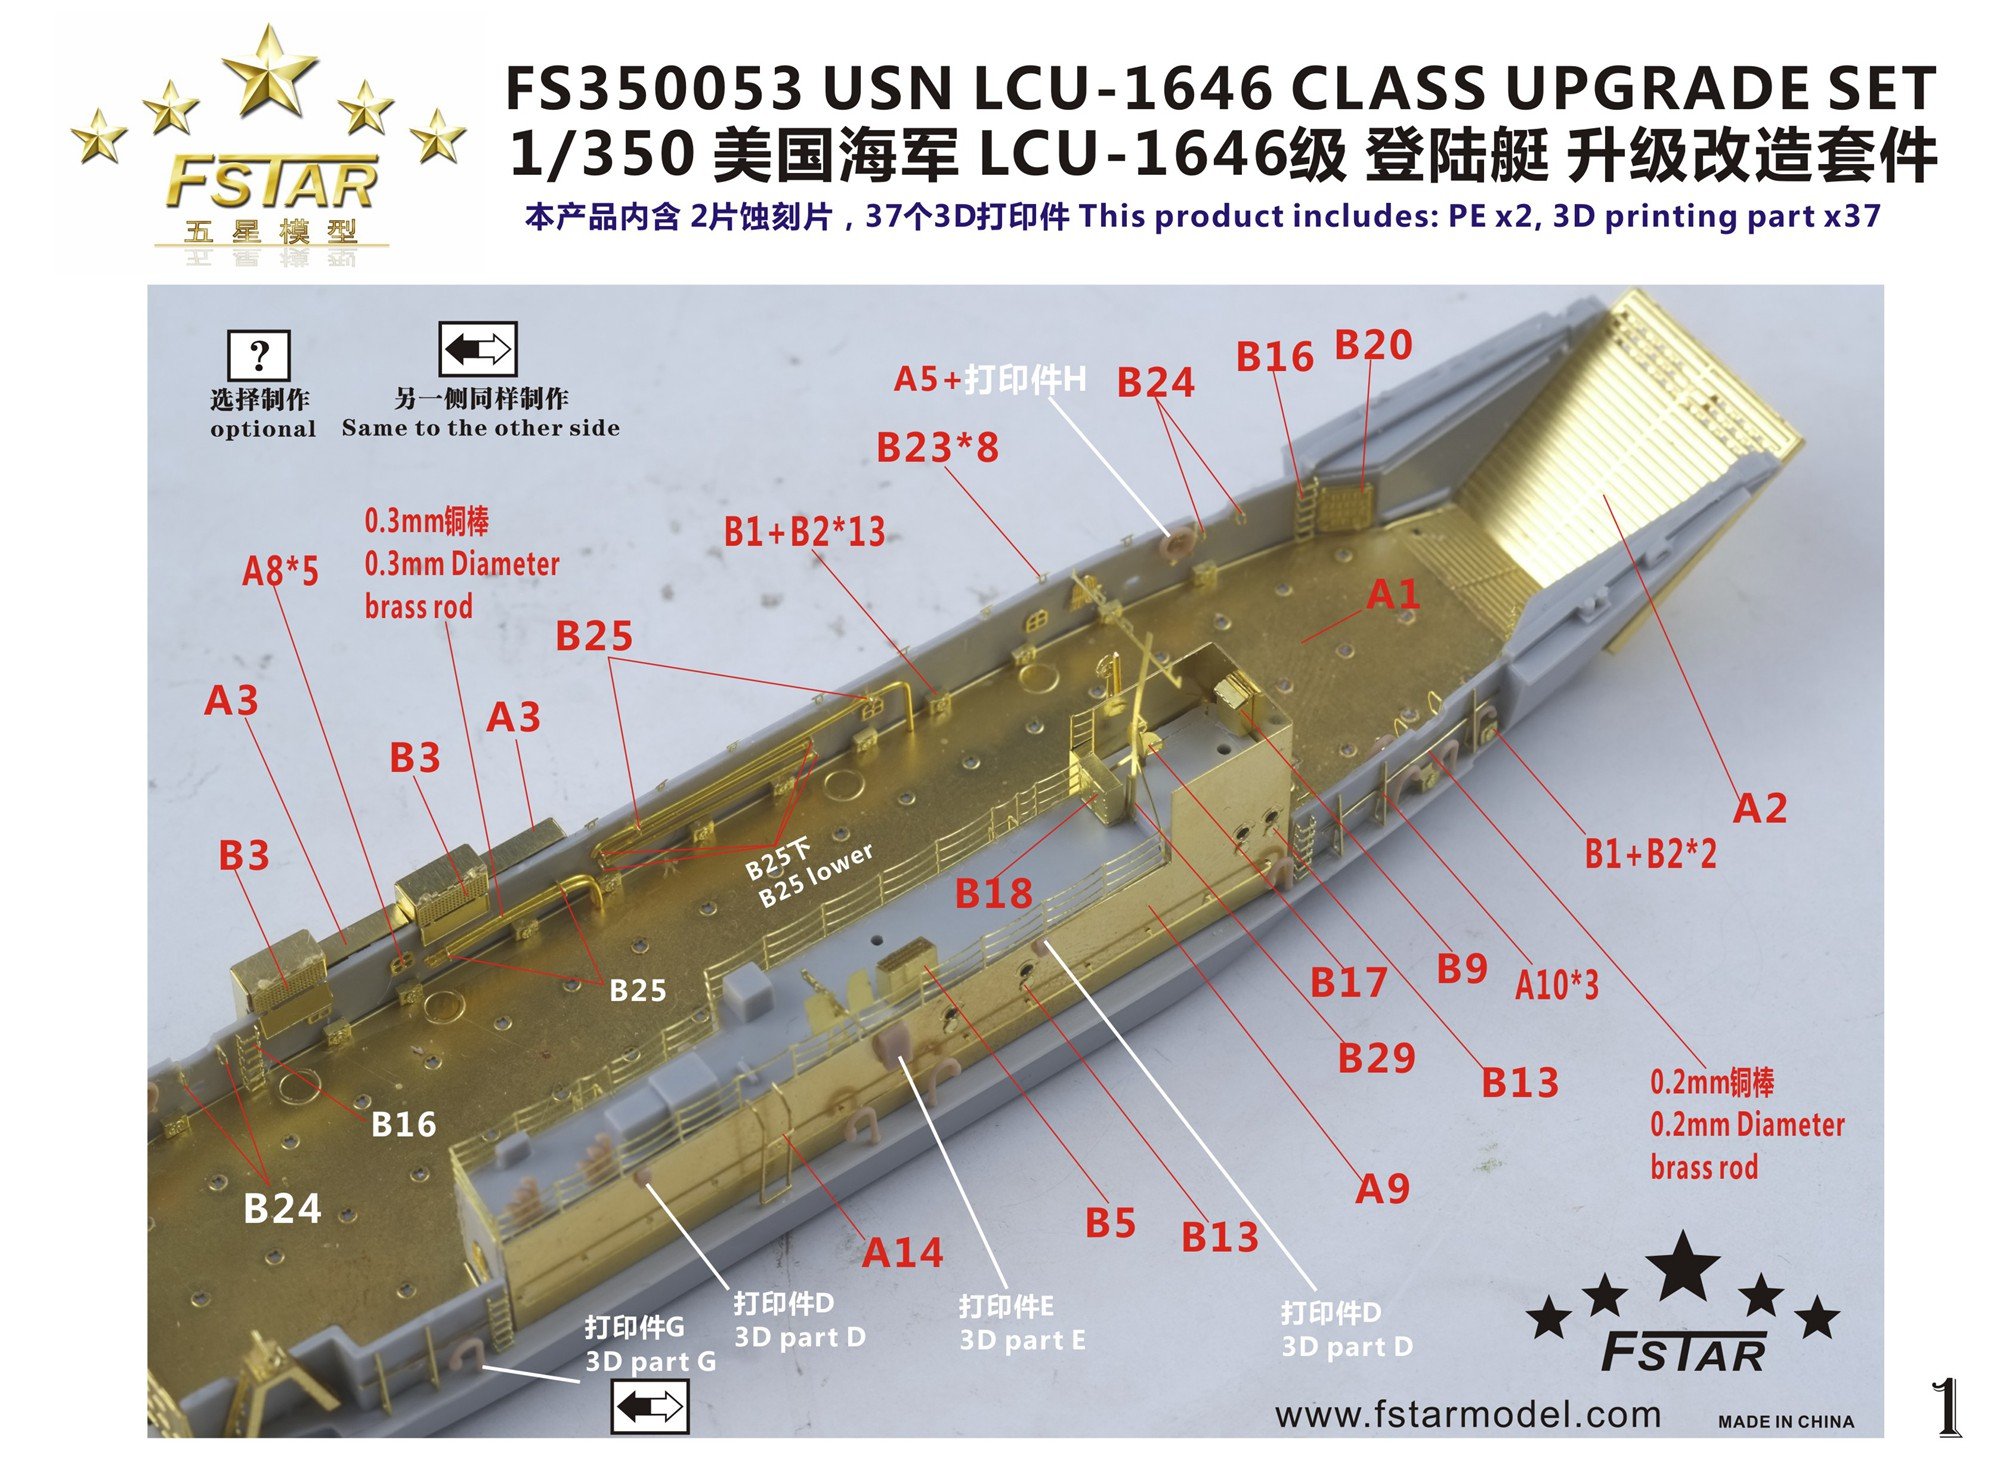 1/350 USN LCU-1646 Class Landing Craft Upgrade Set for Trumpeter - Click Image to Close